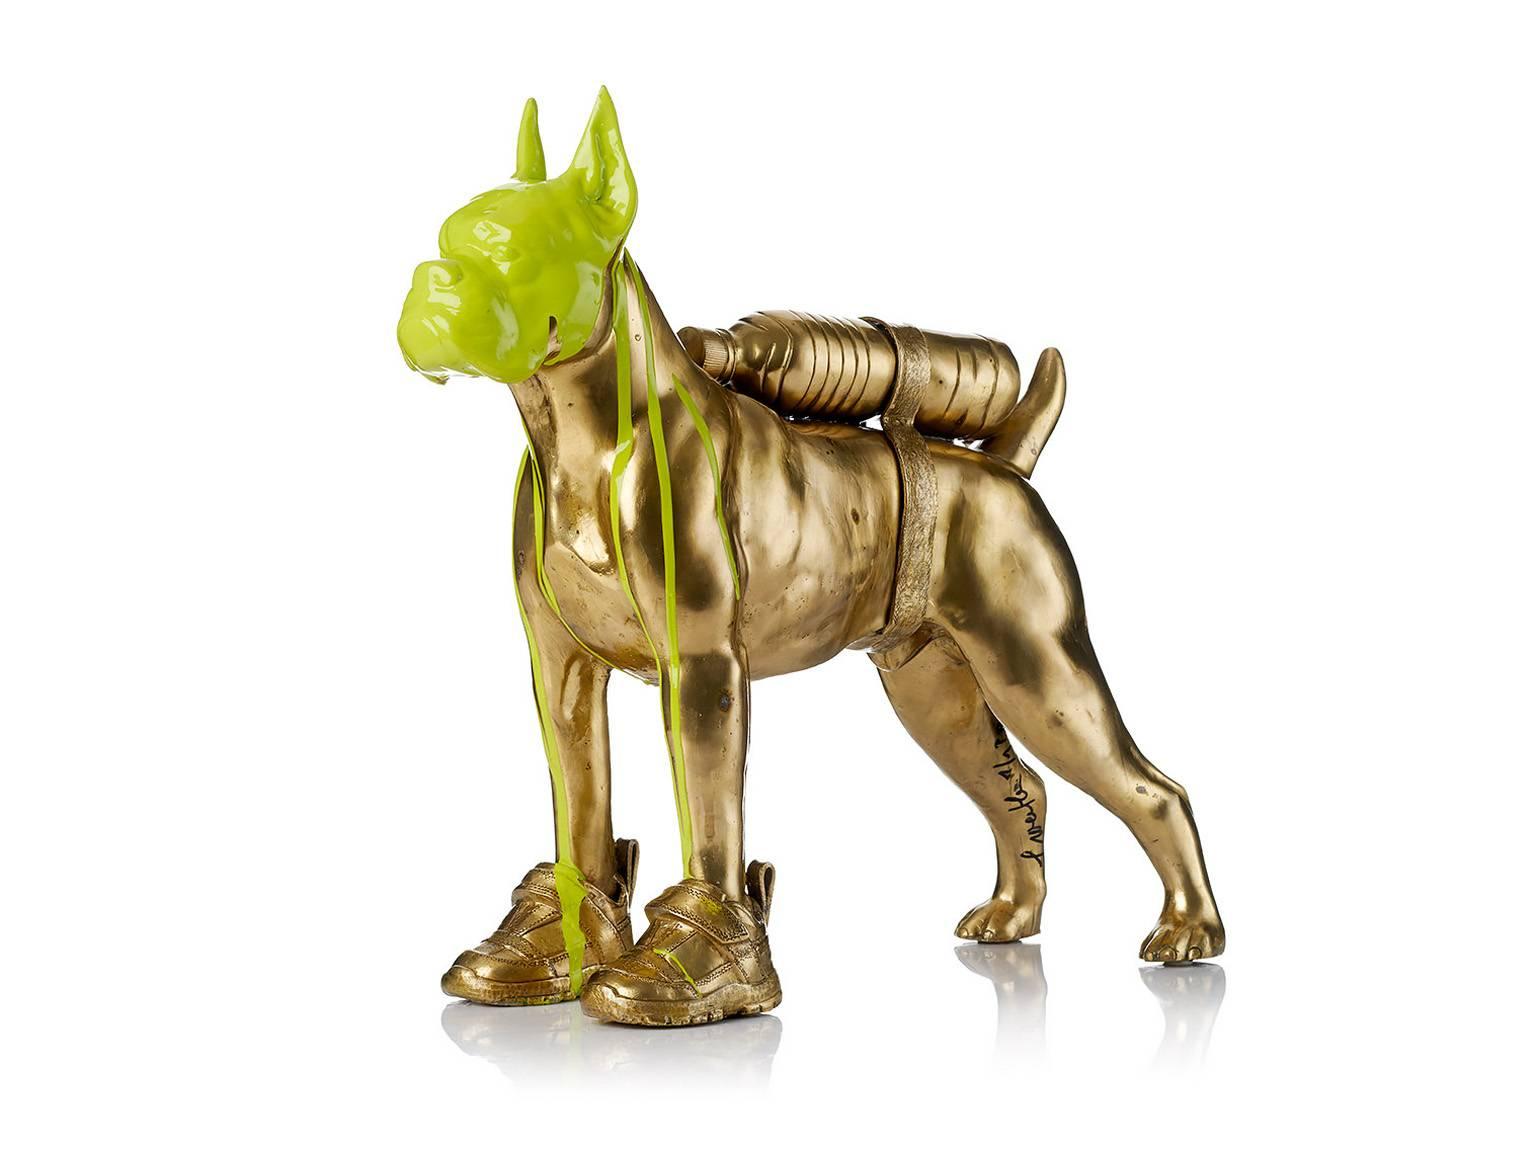 William Sweetlove Figurative Sculpture -  Cloned Bulldog with pet bottle.